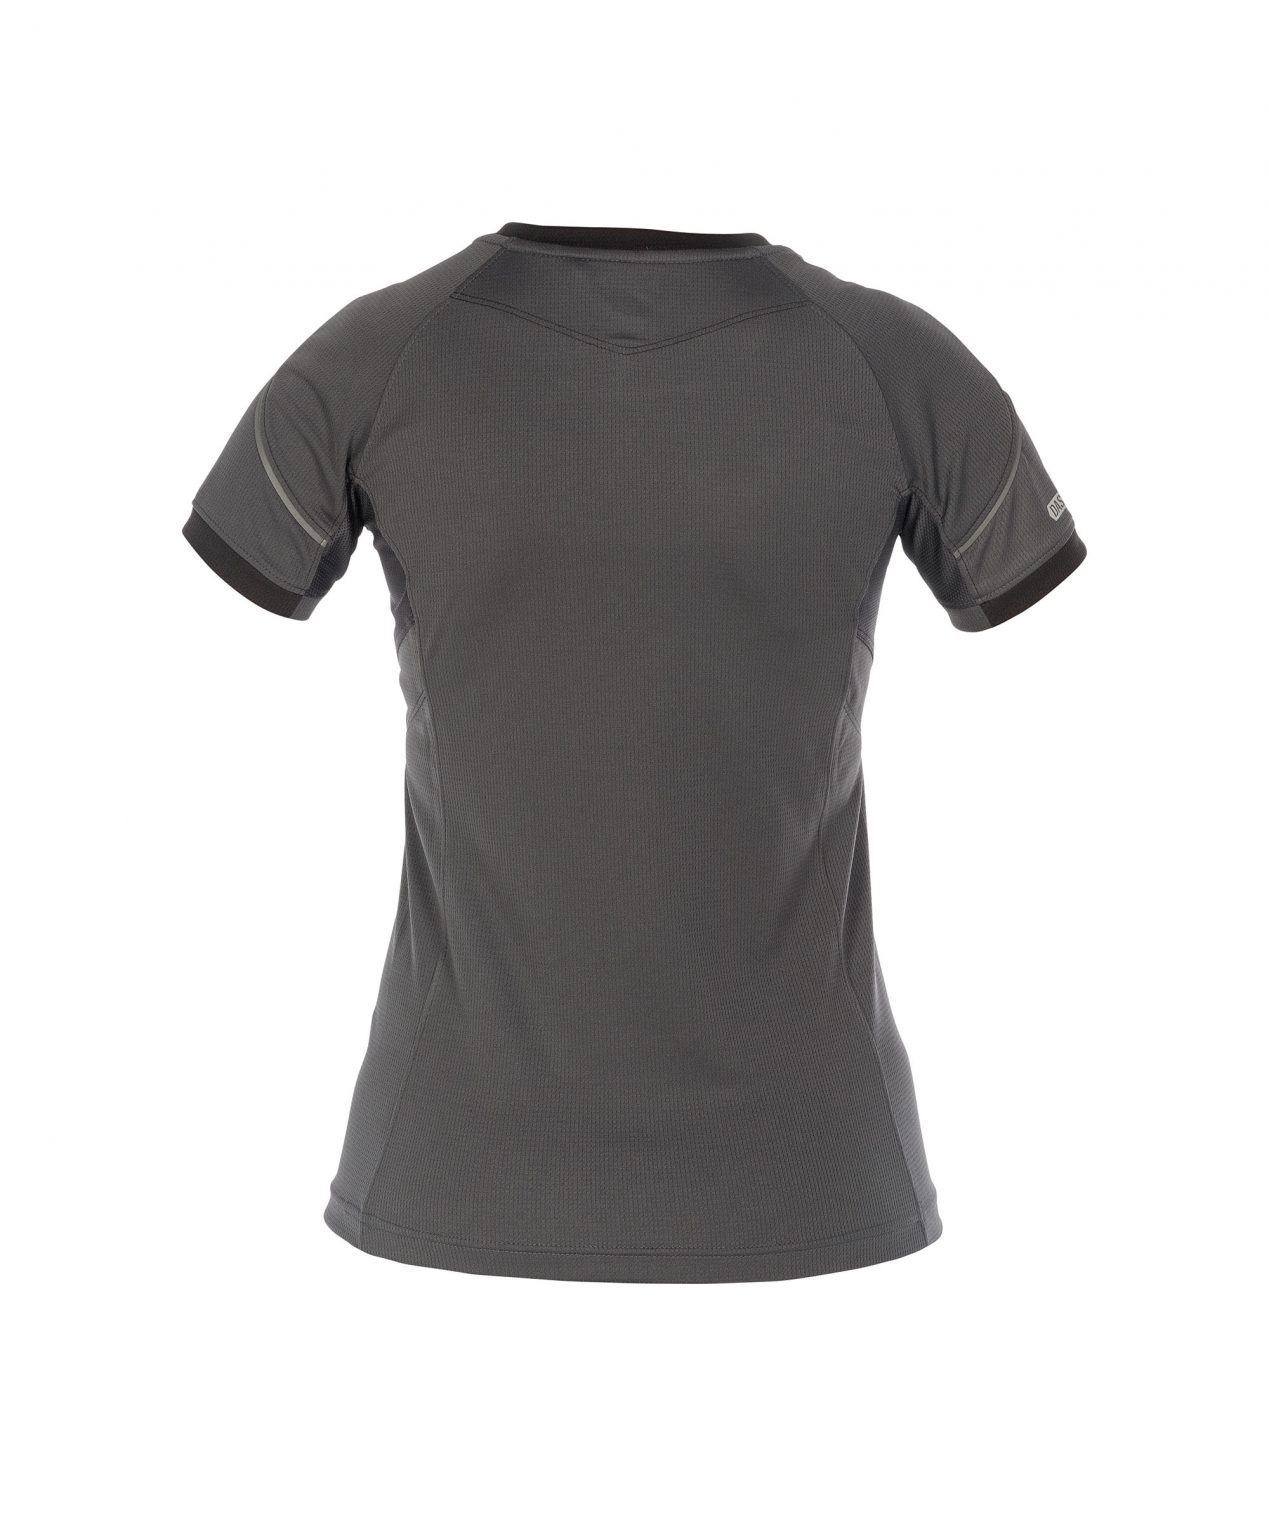 nexus women t shirt anthracite grey black back